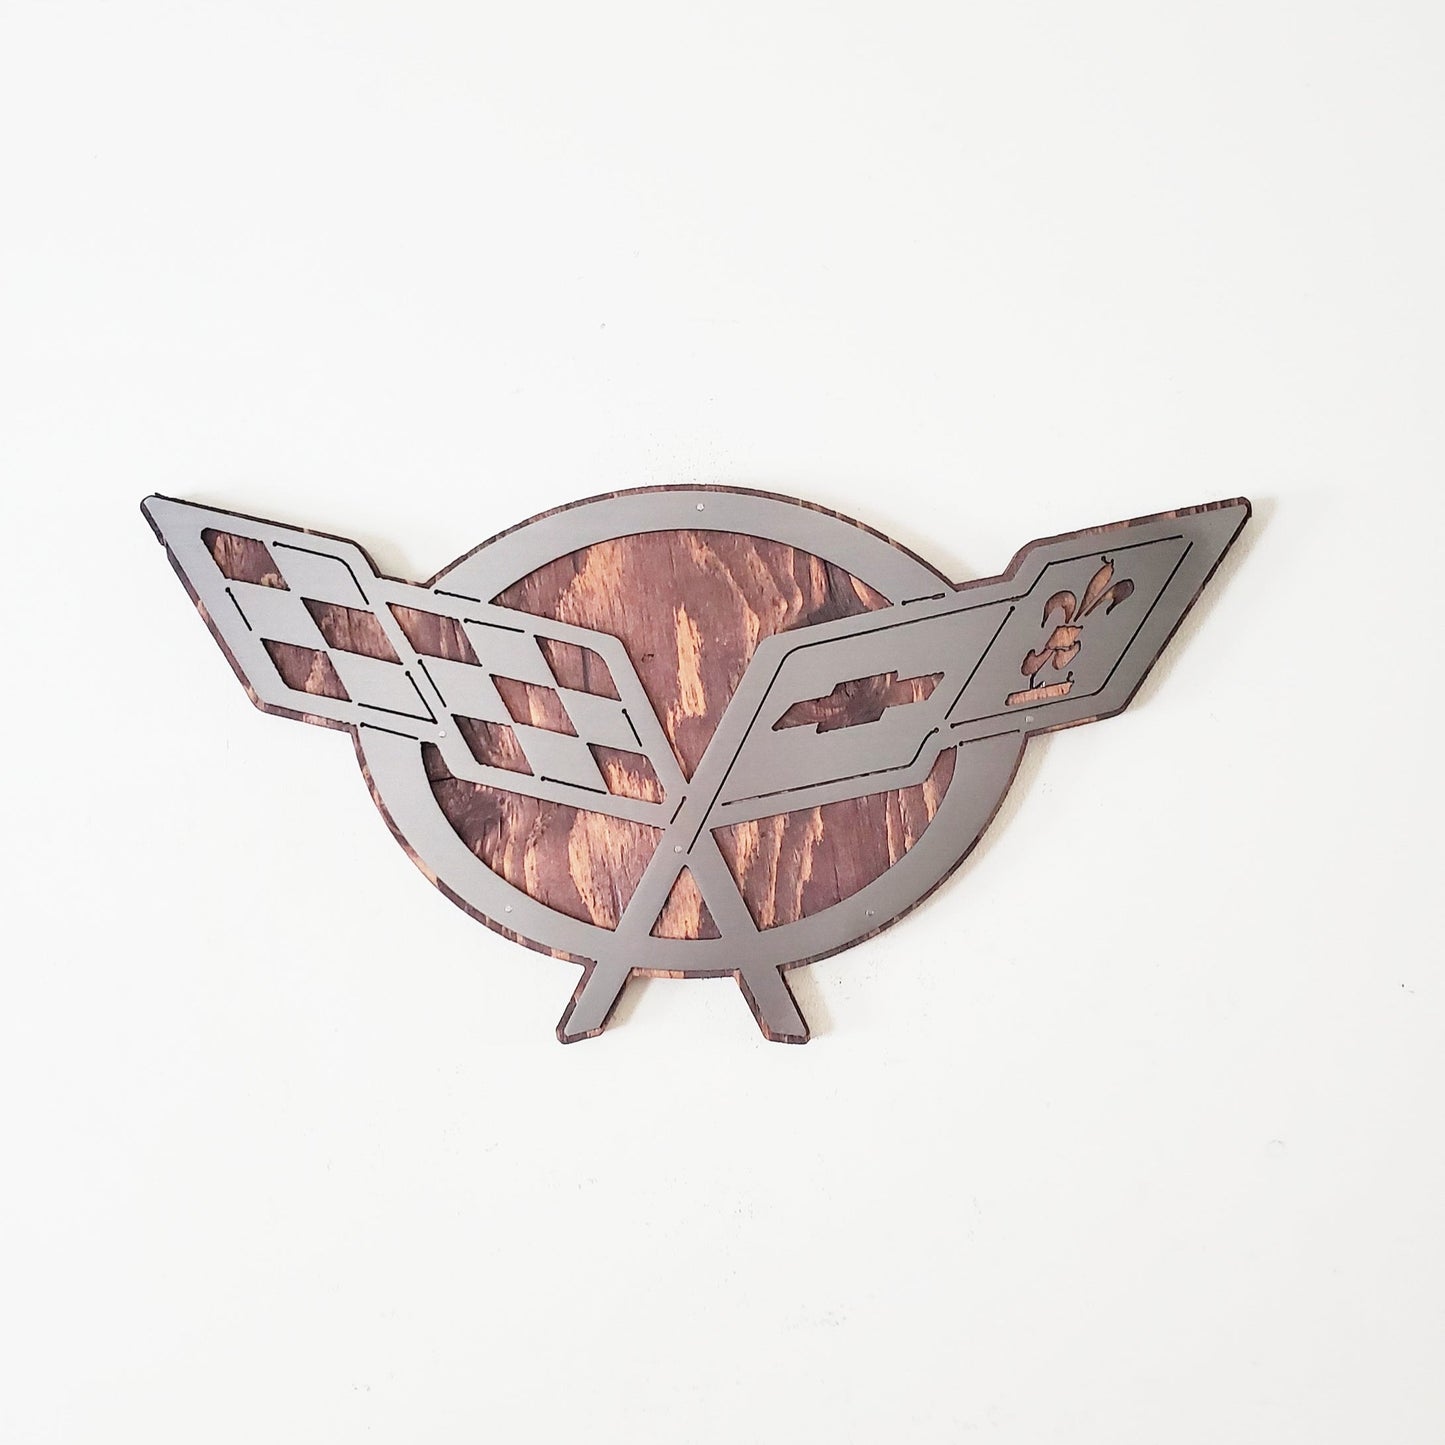 Corvette Flag Sign Metal Art on Wood | Automobile Memorabilia